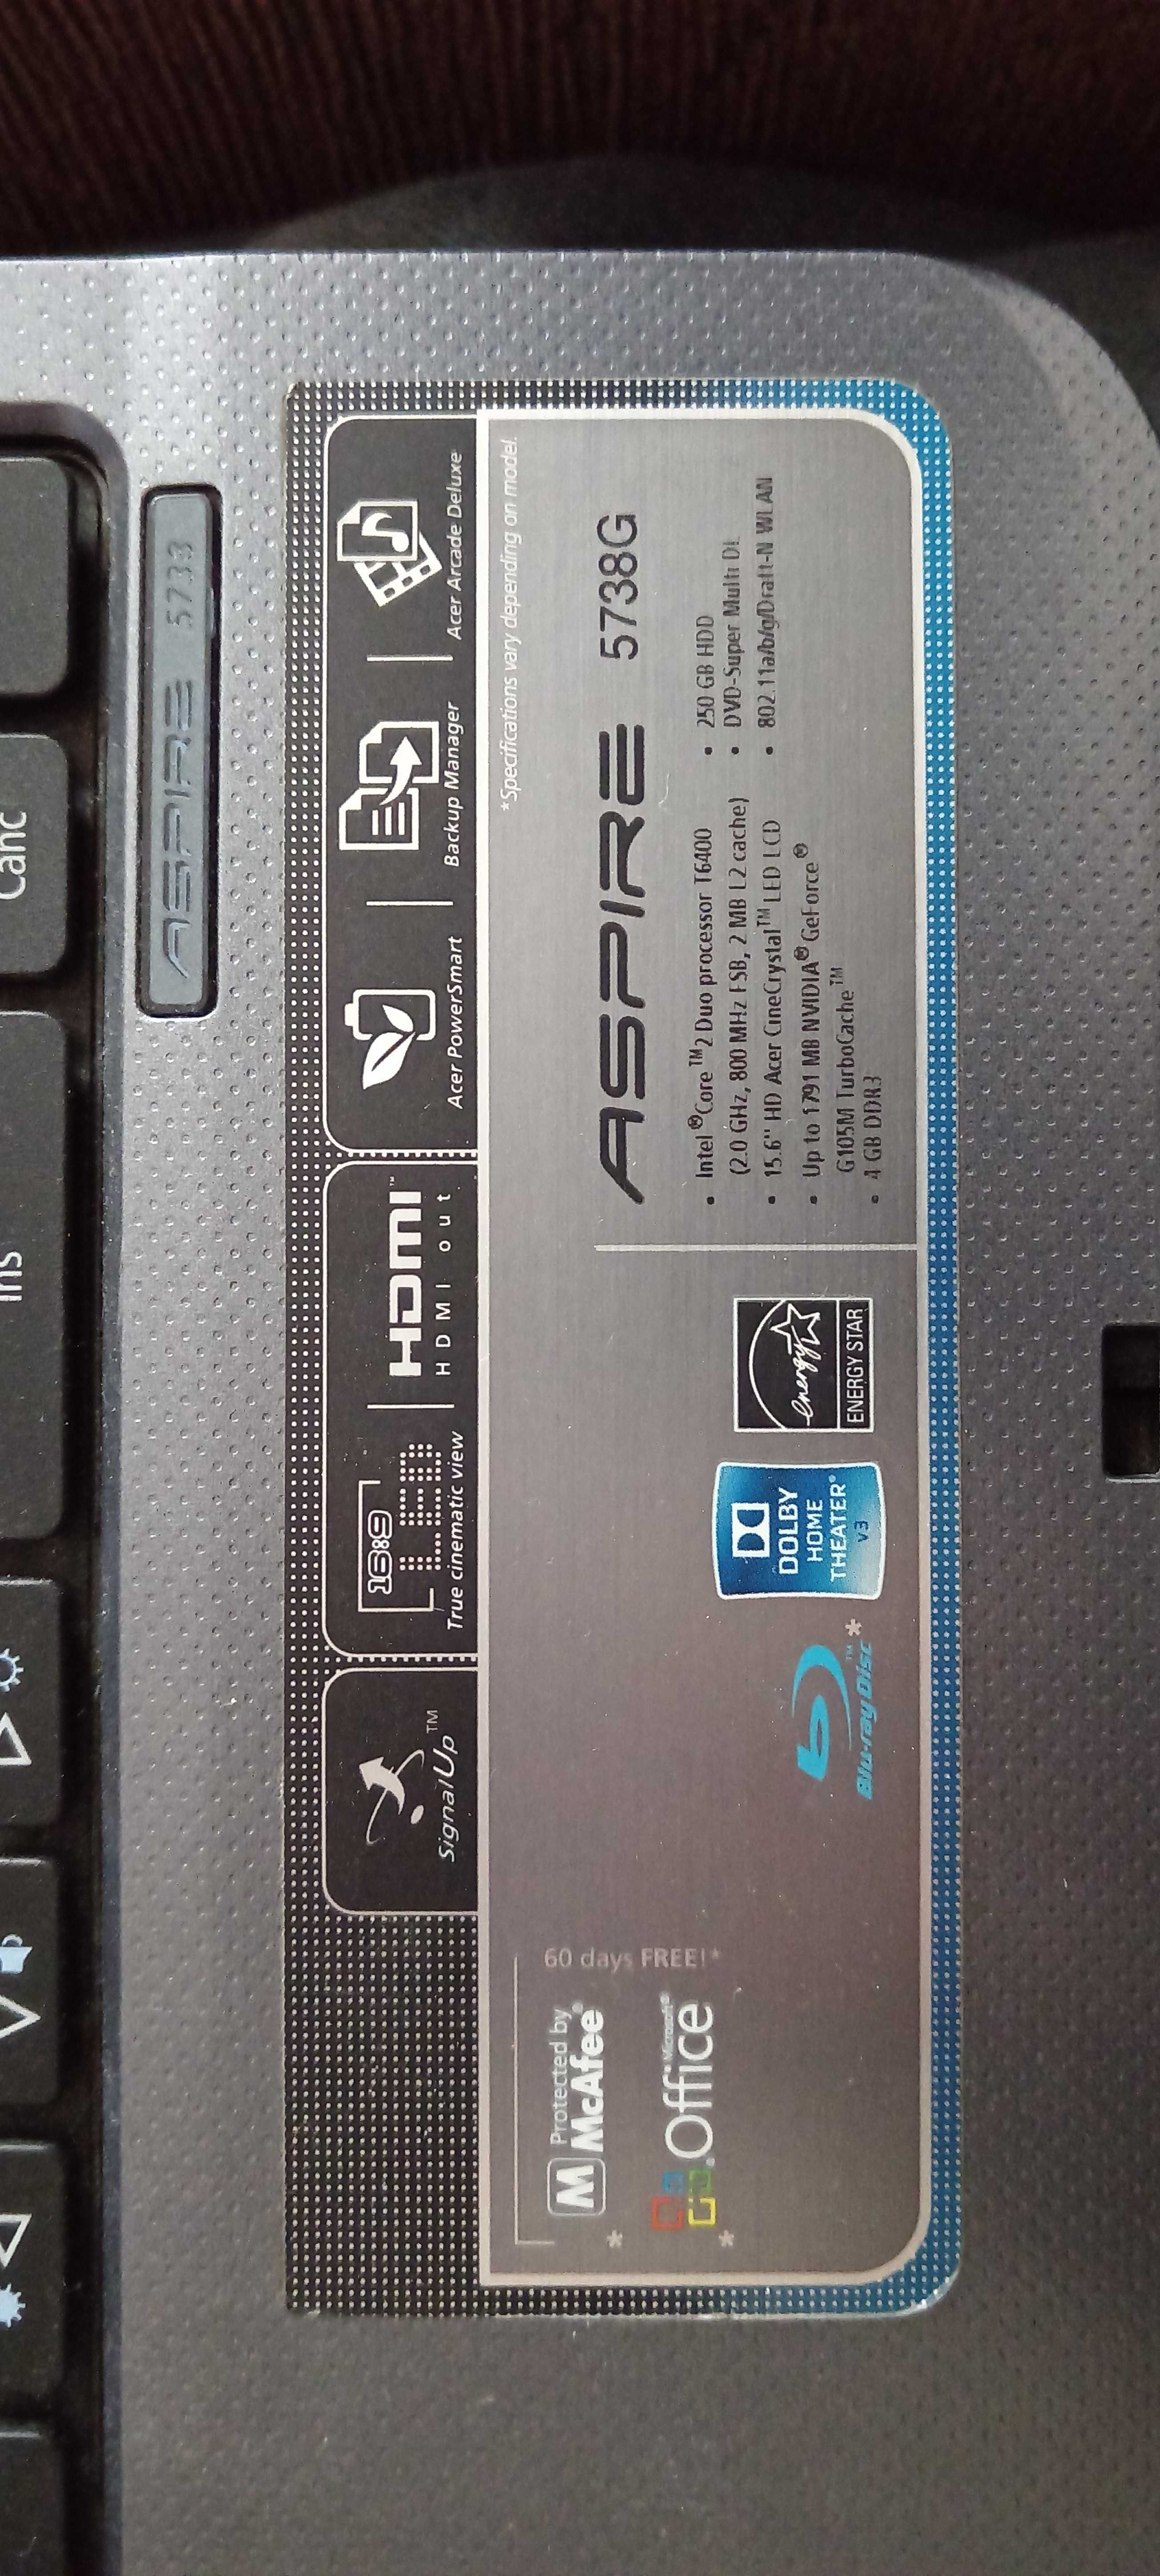 Laptop Acer Aspire 5738/5338